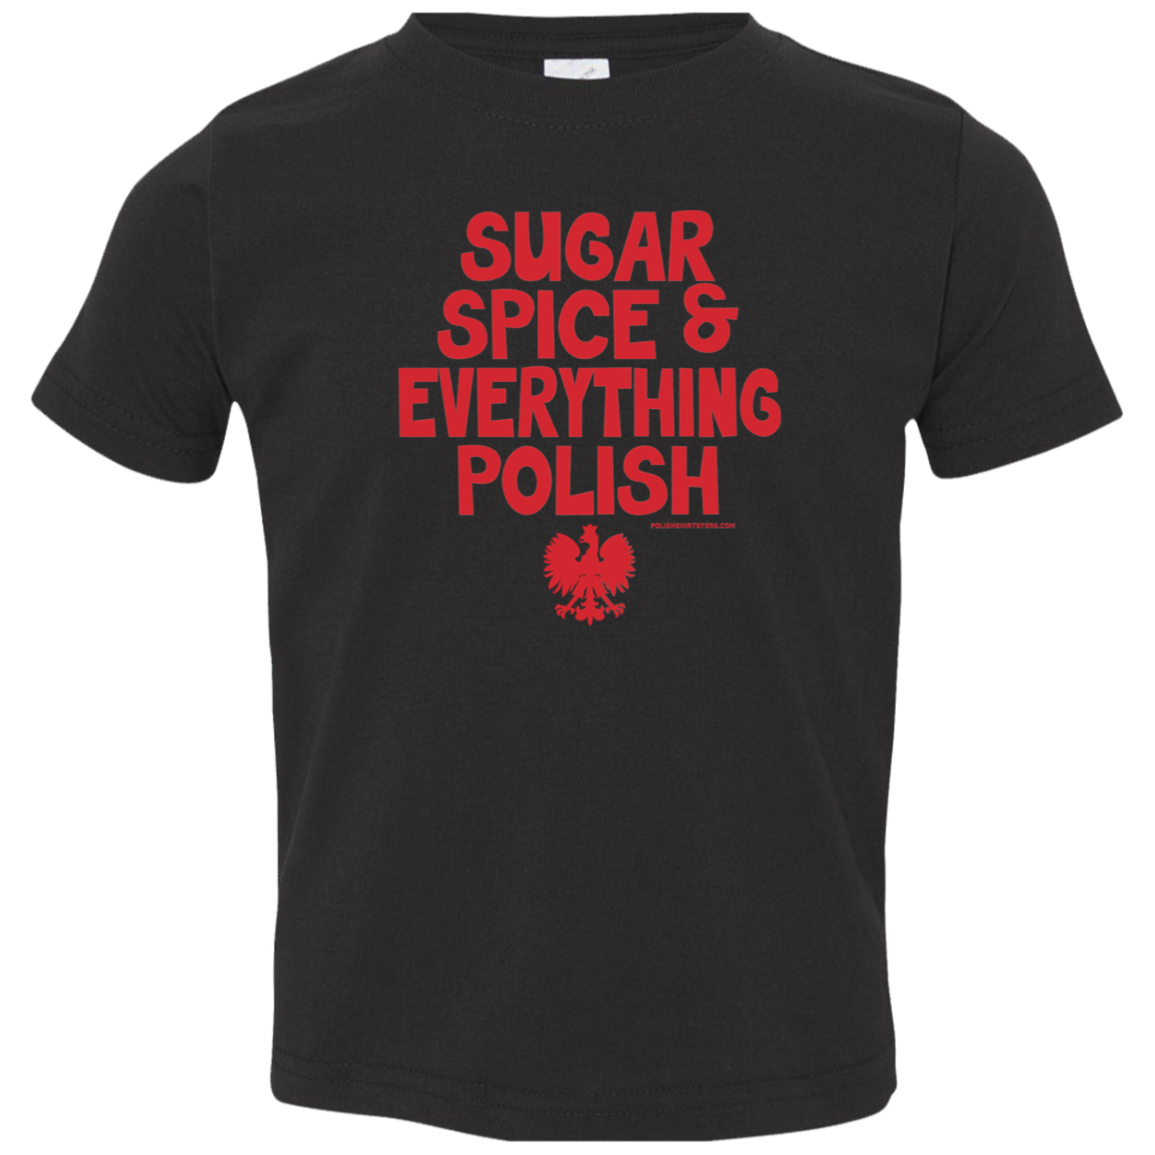 Sugar Spice & Everything Polish Infant & Toddler T-Shirt Apparel CustomCat Toddler T-Shirt Black 2T